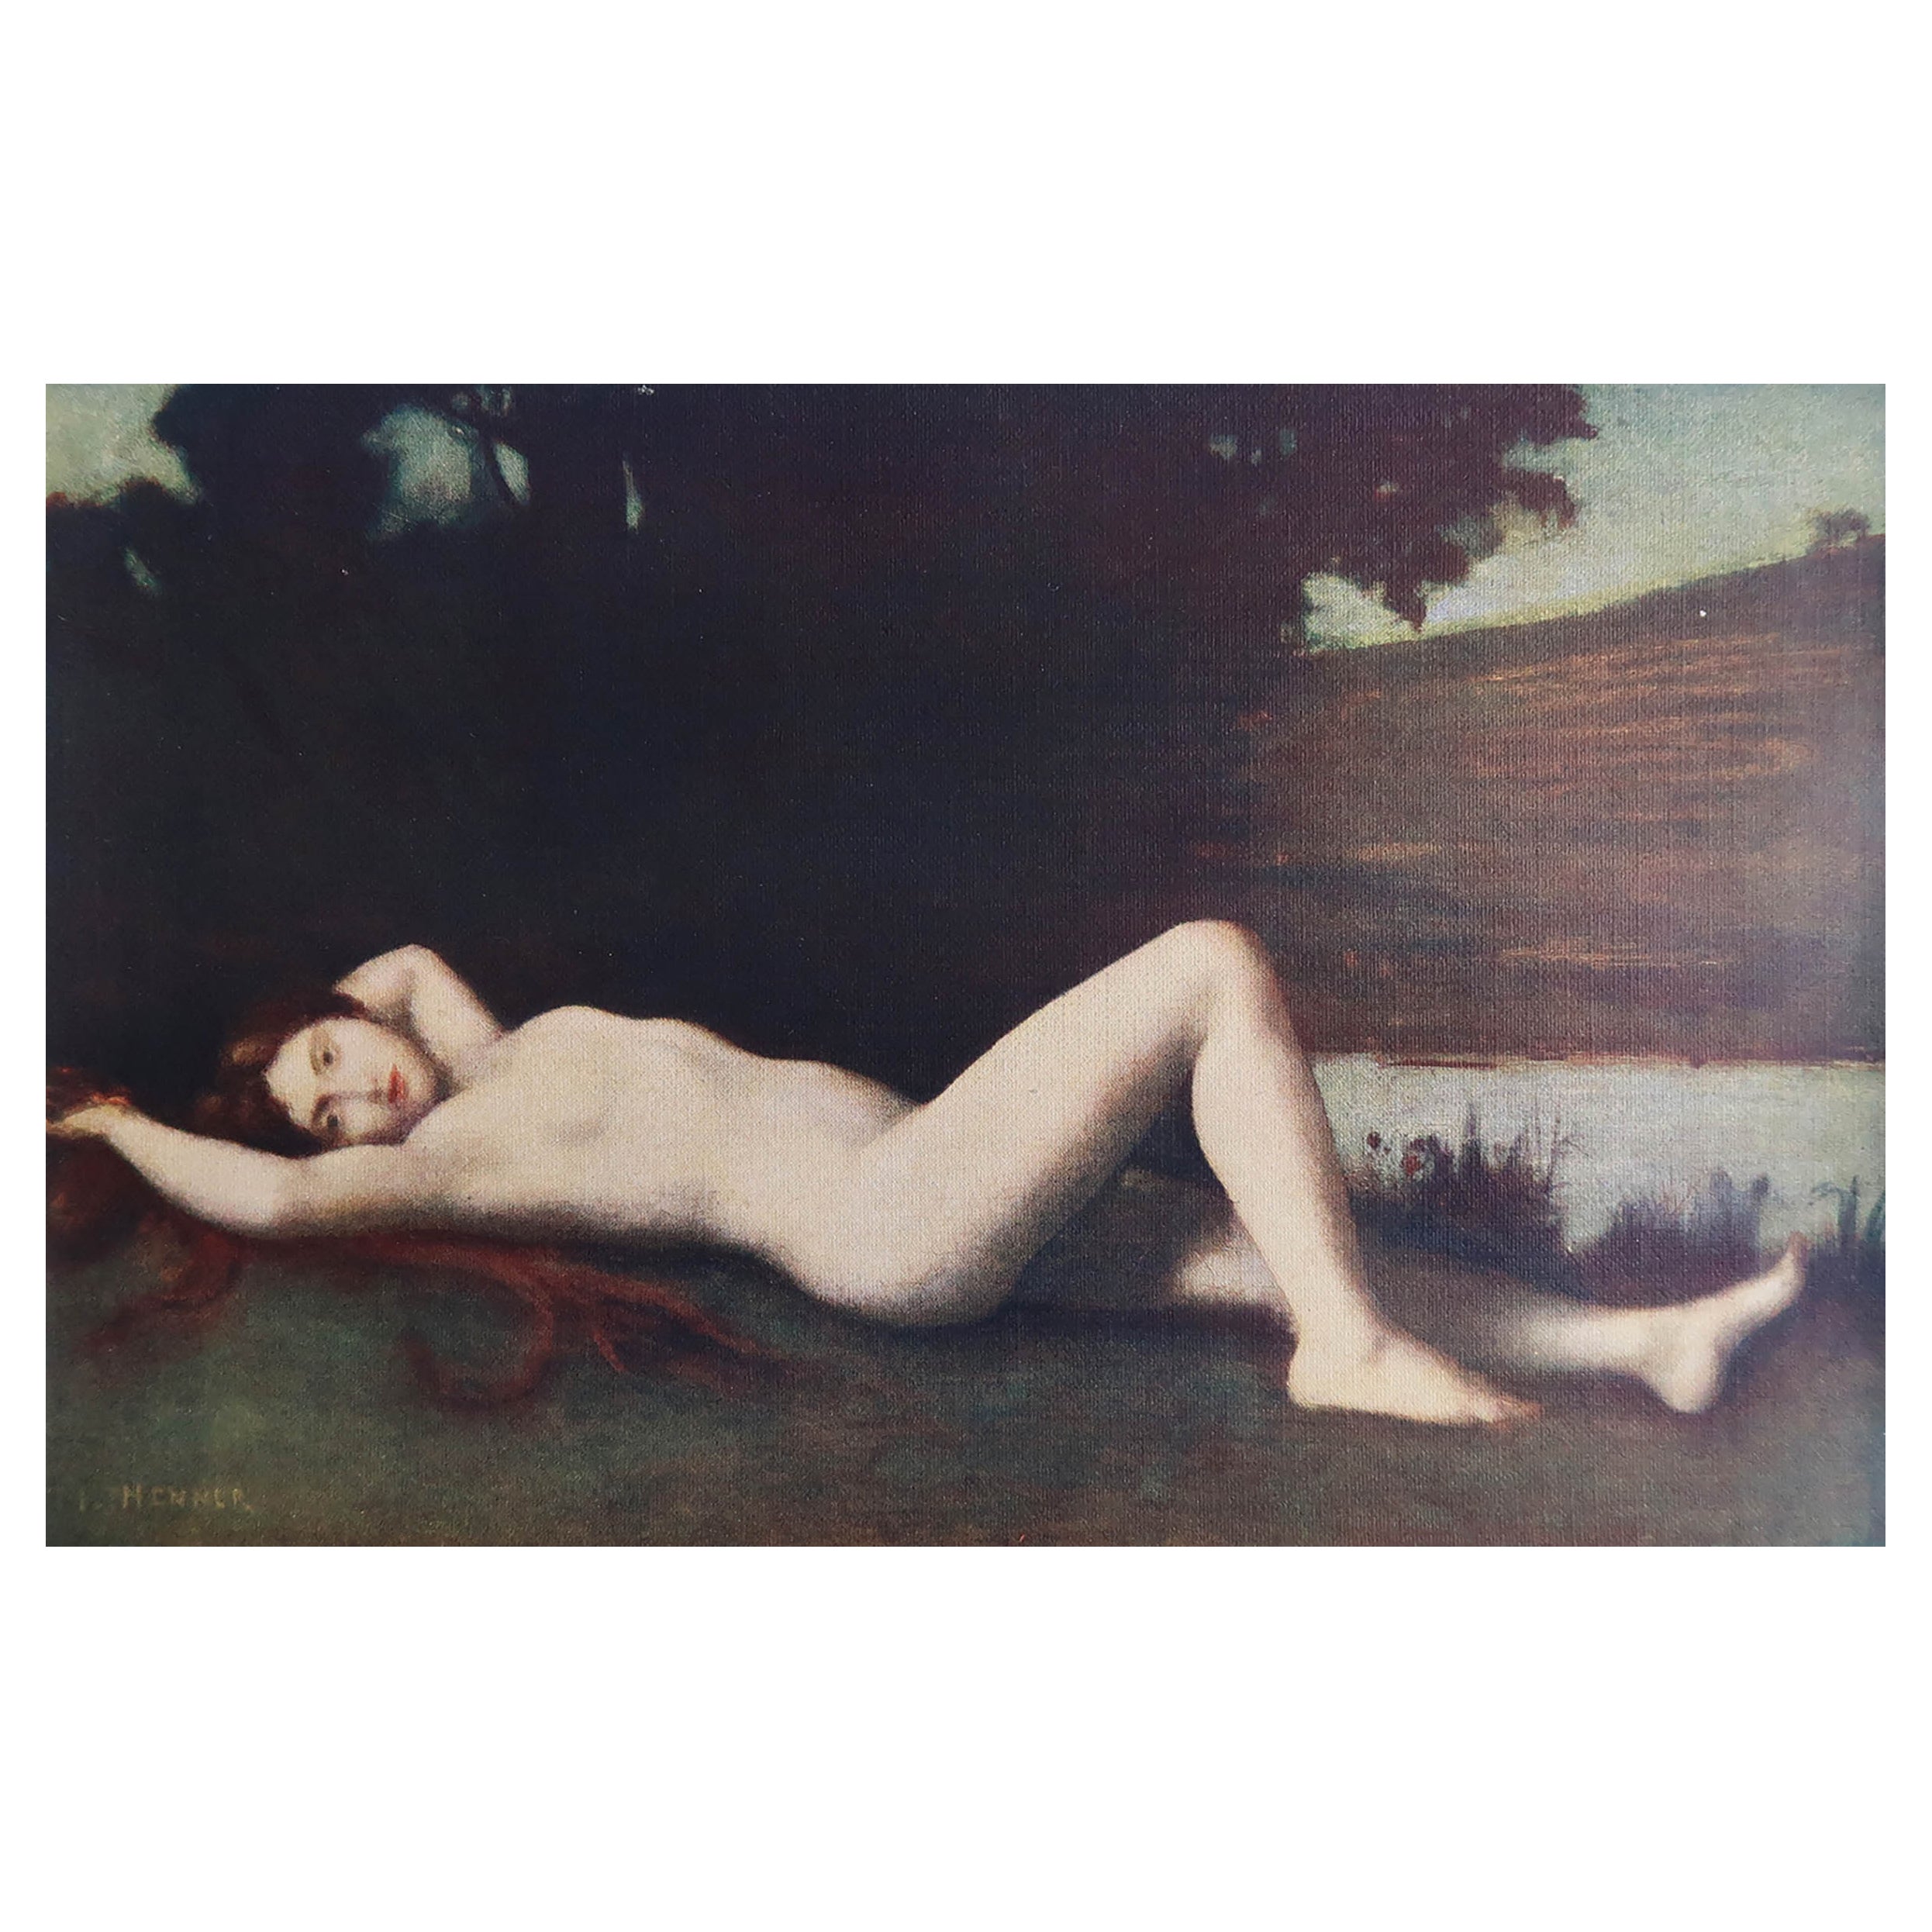 Original Vintage Print of A Female Nude After Jean Jaques Henner. C.1920